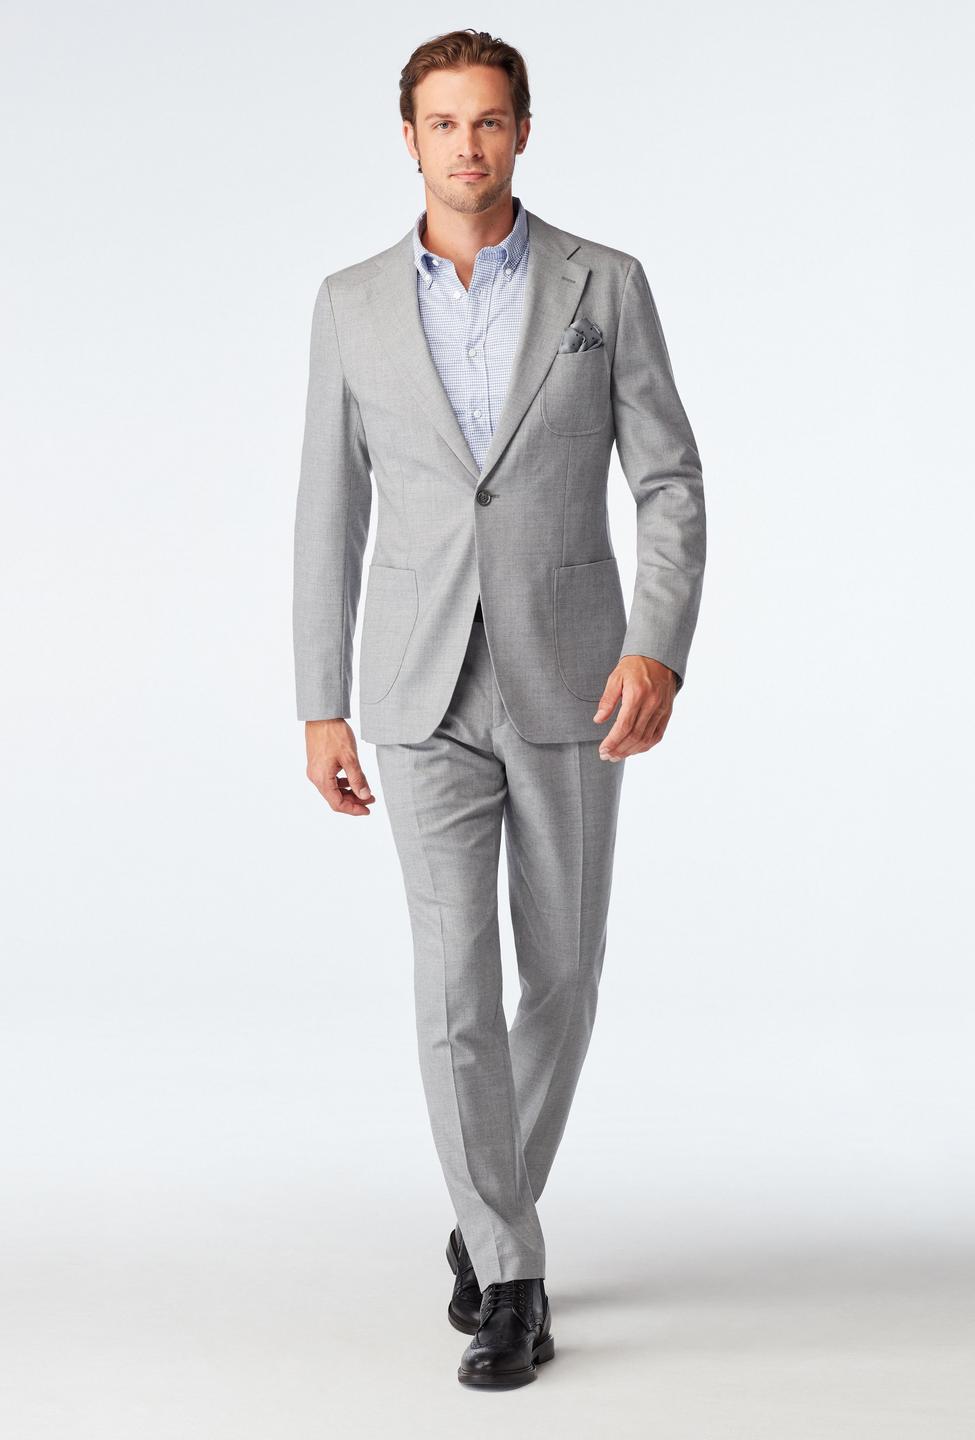 Hayward Flannel Light Gray Suit